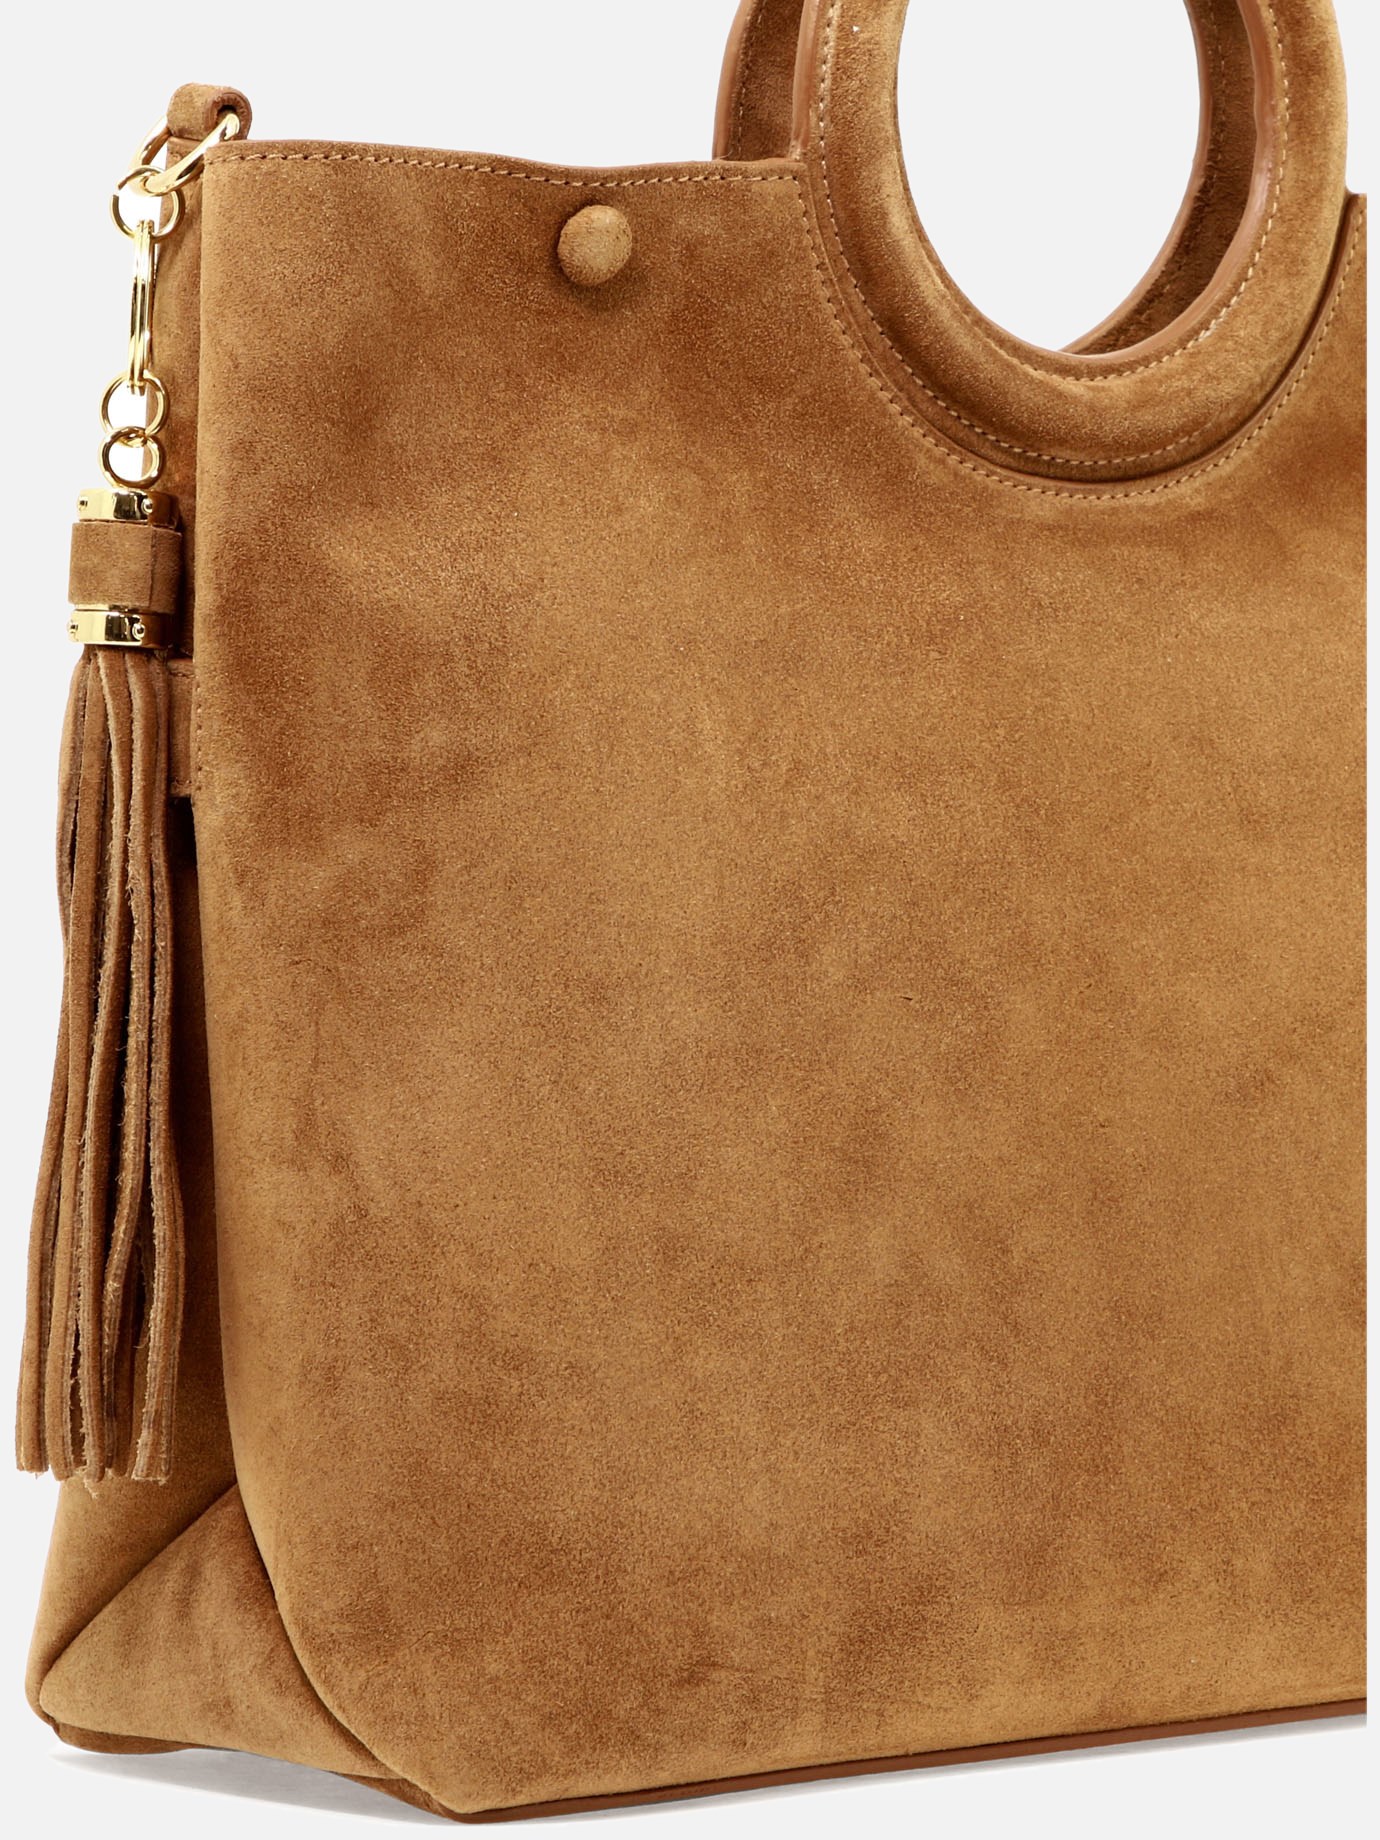  Jennifer  handbag by Amma Mode